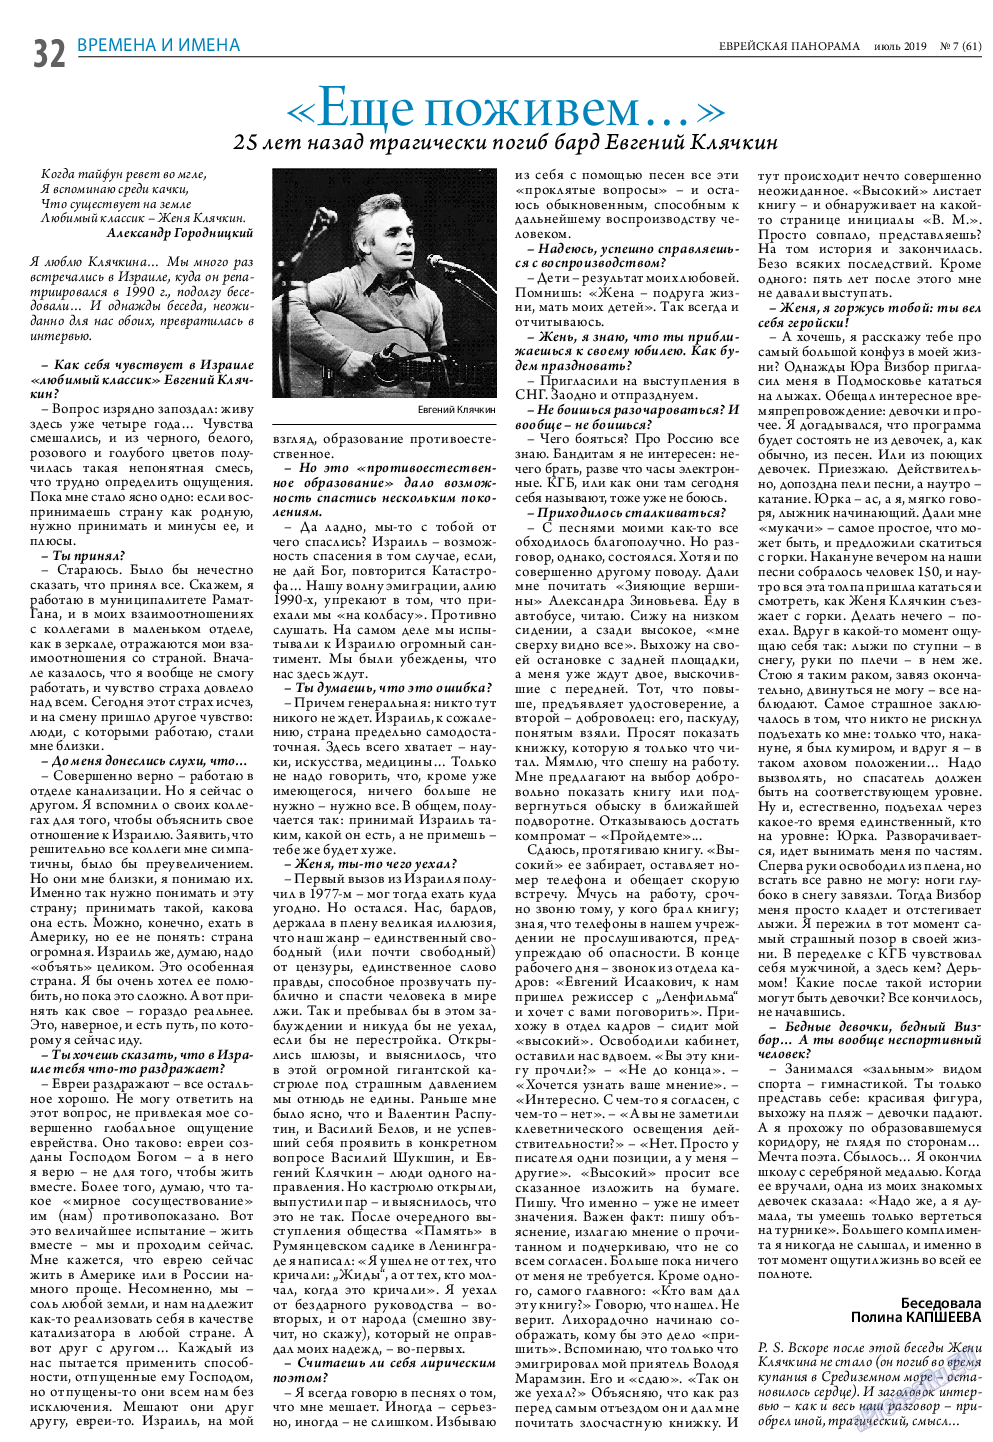 Еврейская панорама, газета. 2019 №7 стр.32